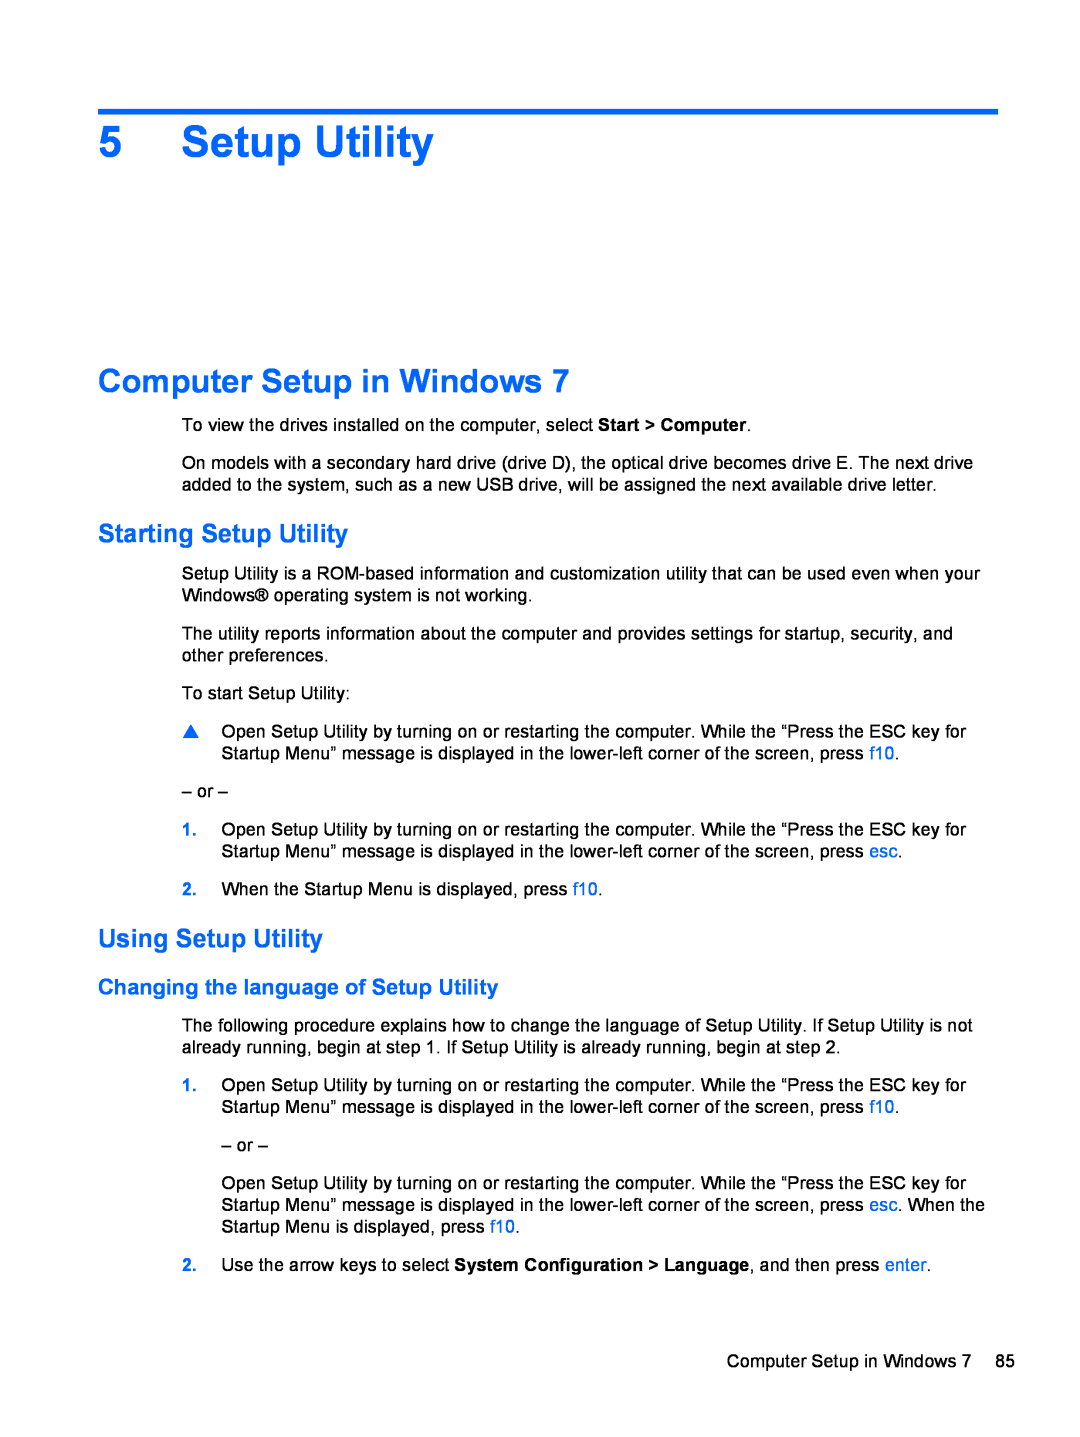 Compaq CQ42 manual Computer Setup in Windows, Starting Setup Utility, Using Setup Utility 